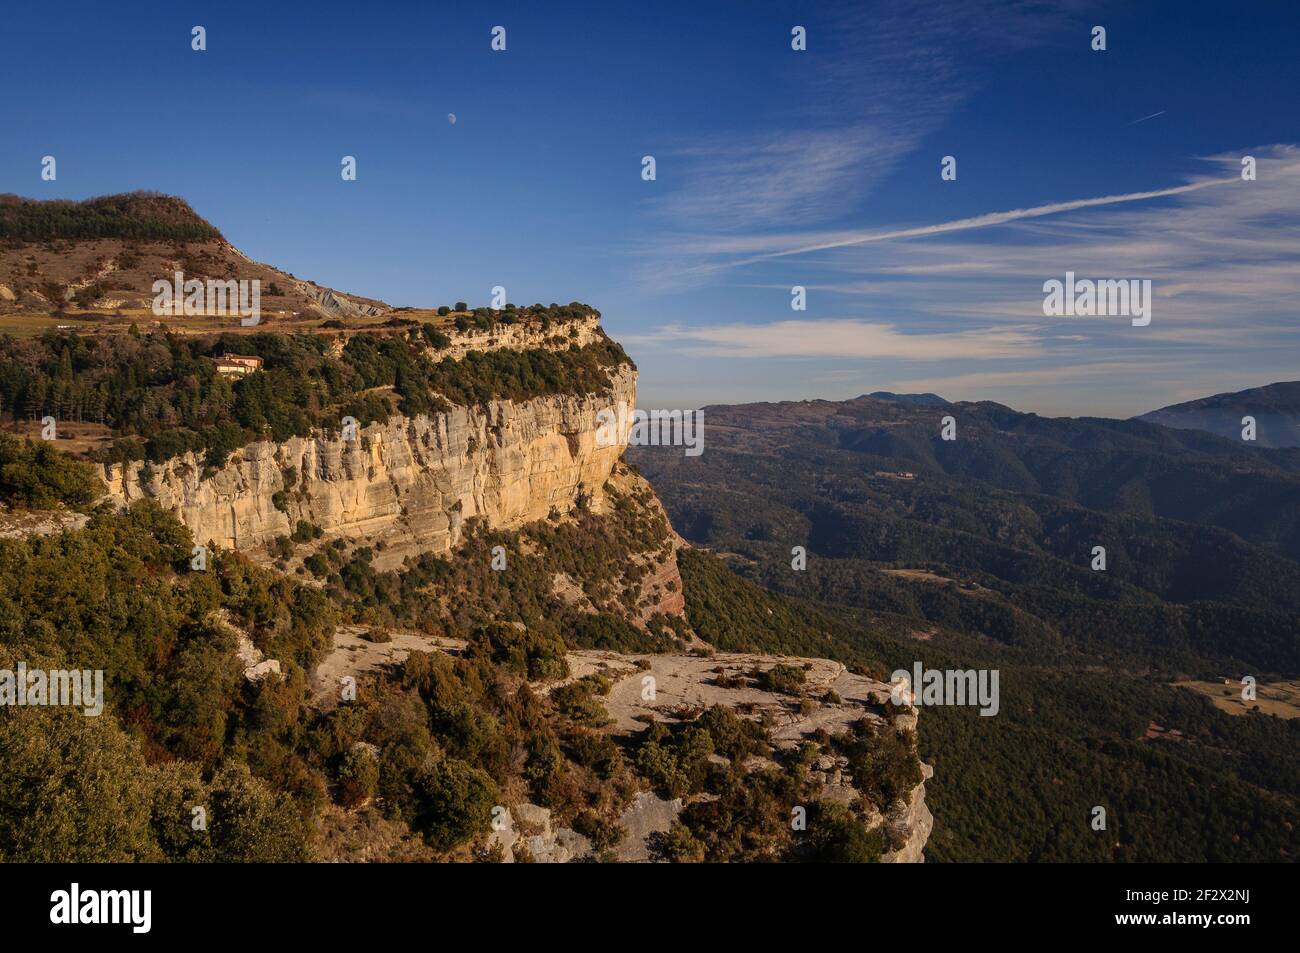 Tavertet Cliffs in winter (Barcelona province, Catalonia, Spain)  ESP: Acantilados de Tavertet en invierno (provincia de Barcelona, Cataluña, España) Stock Photo